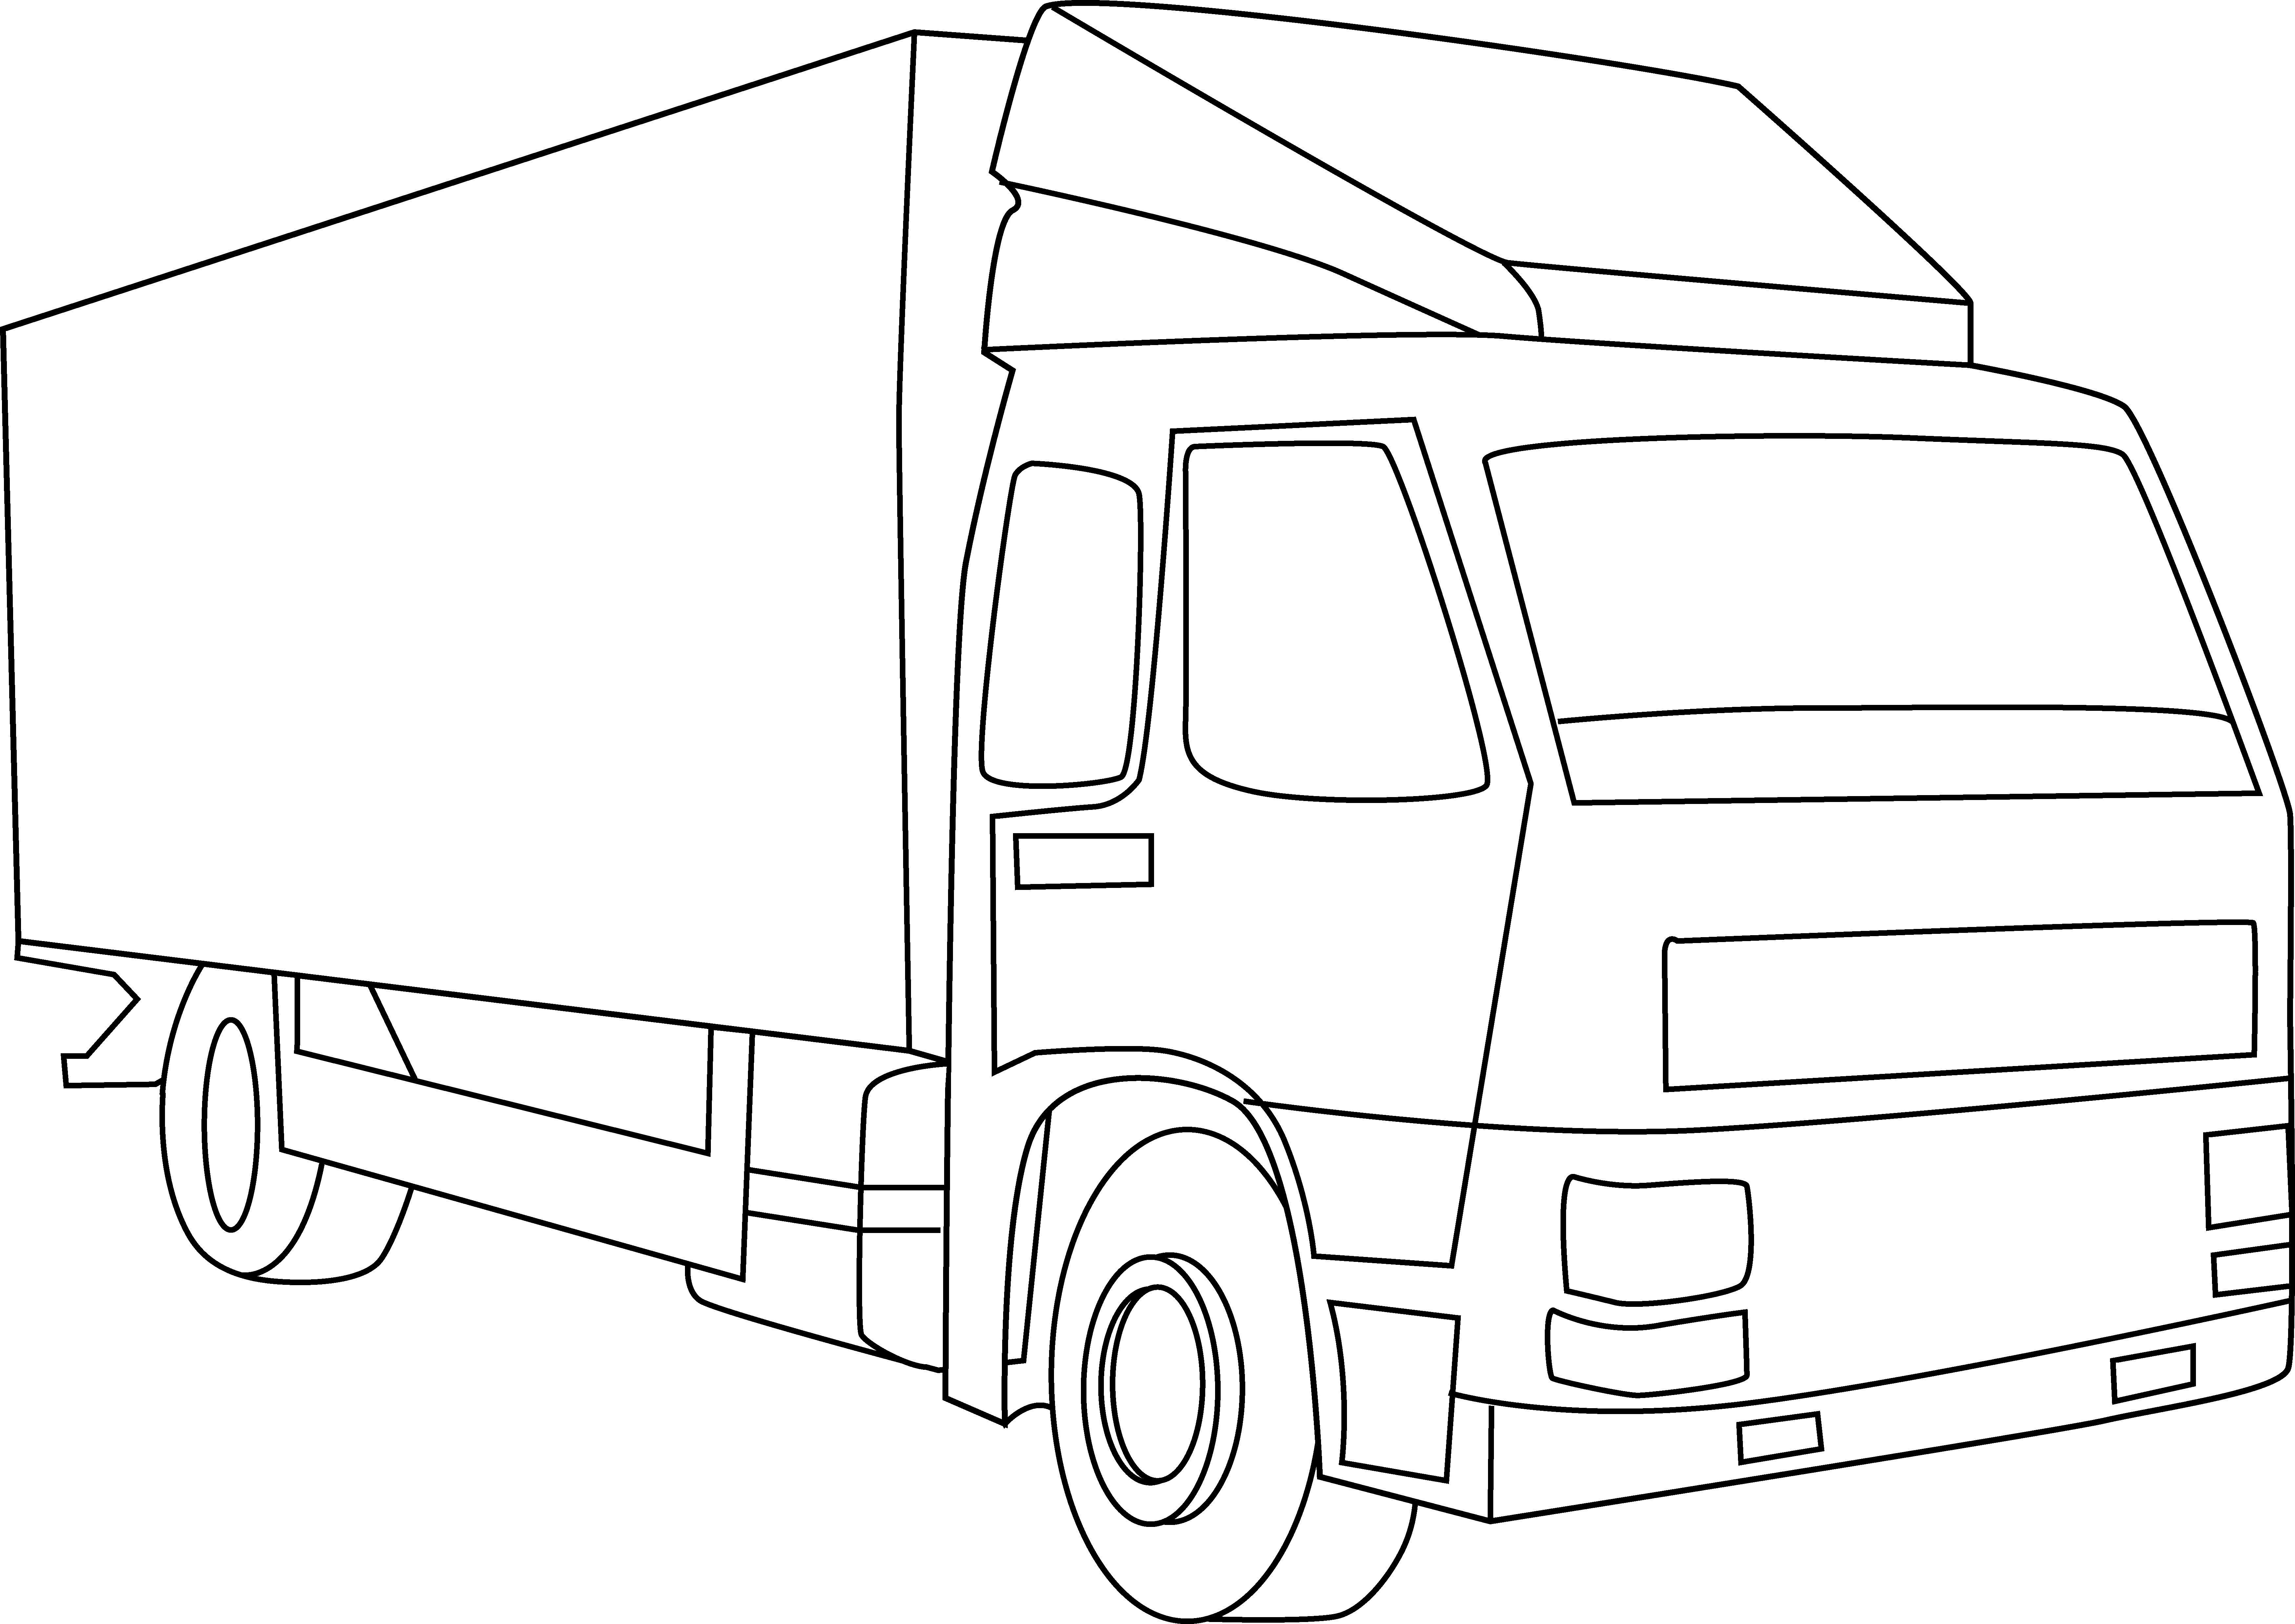 Cargo Truck Line Art - Free Clip Art